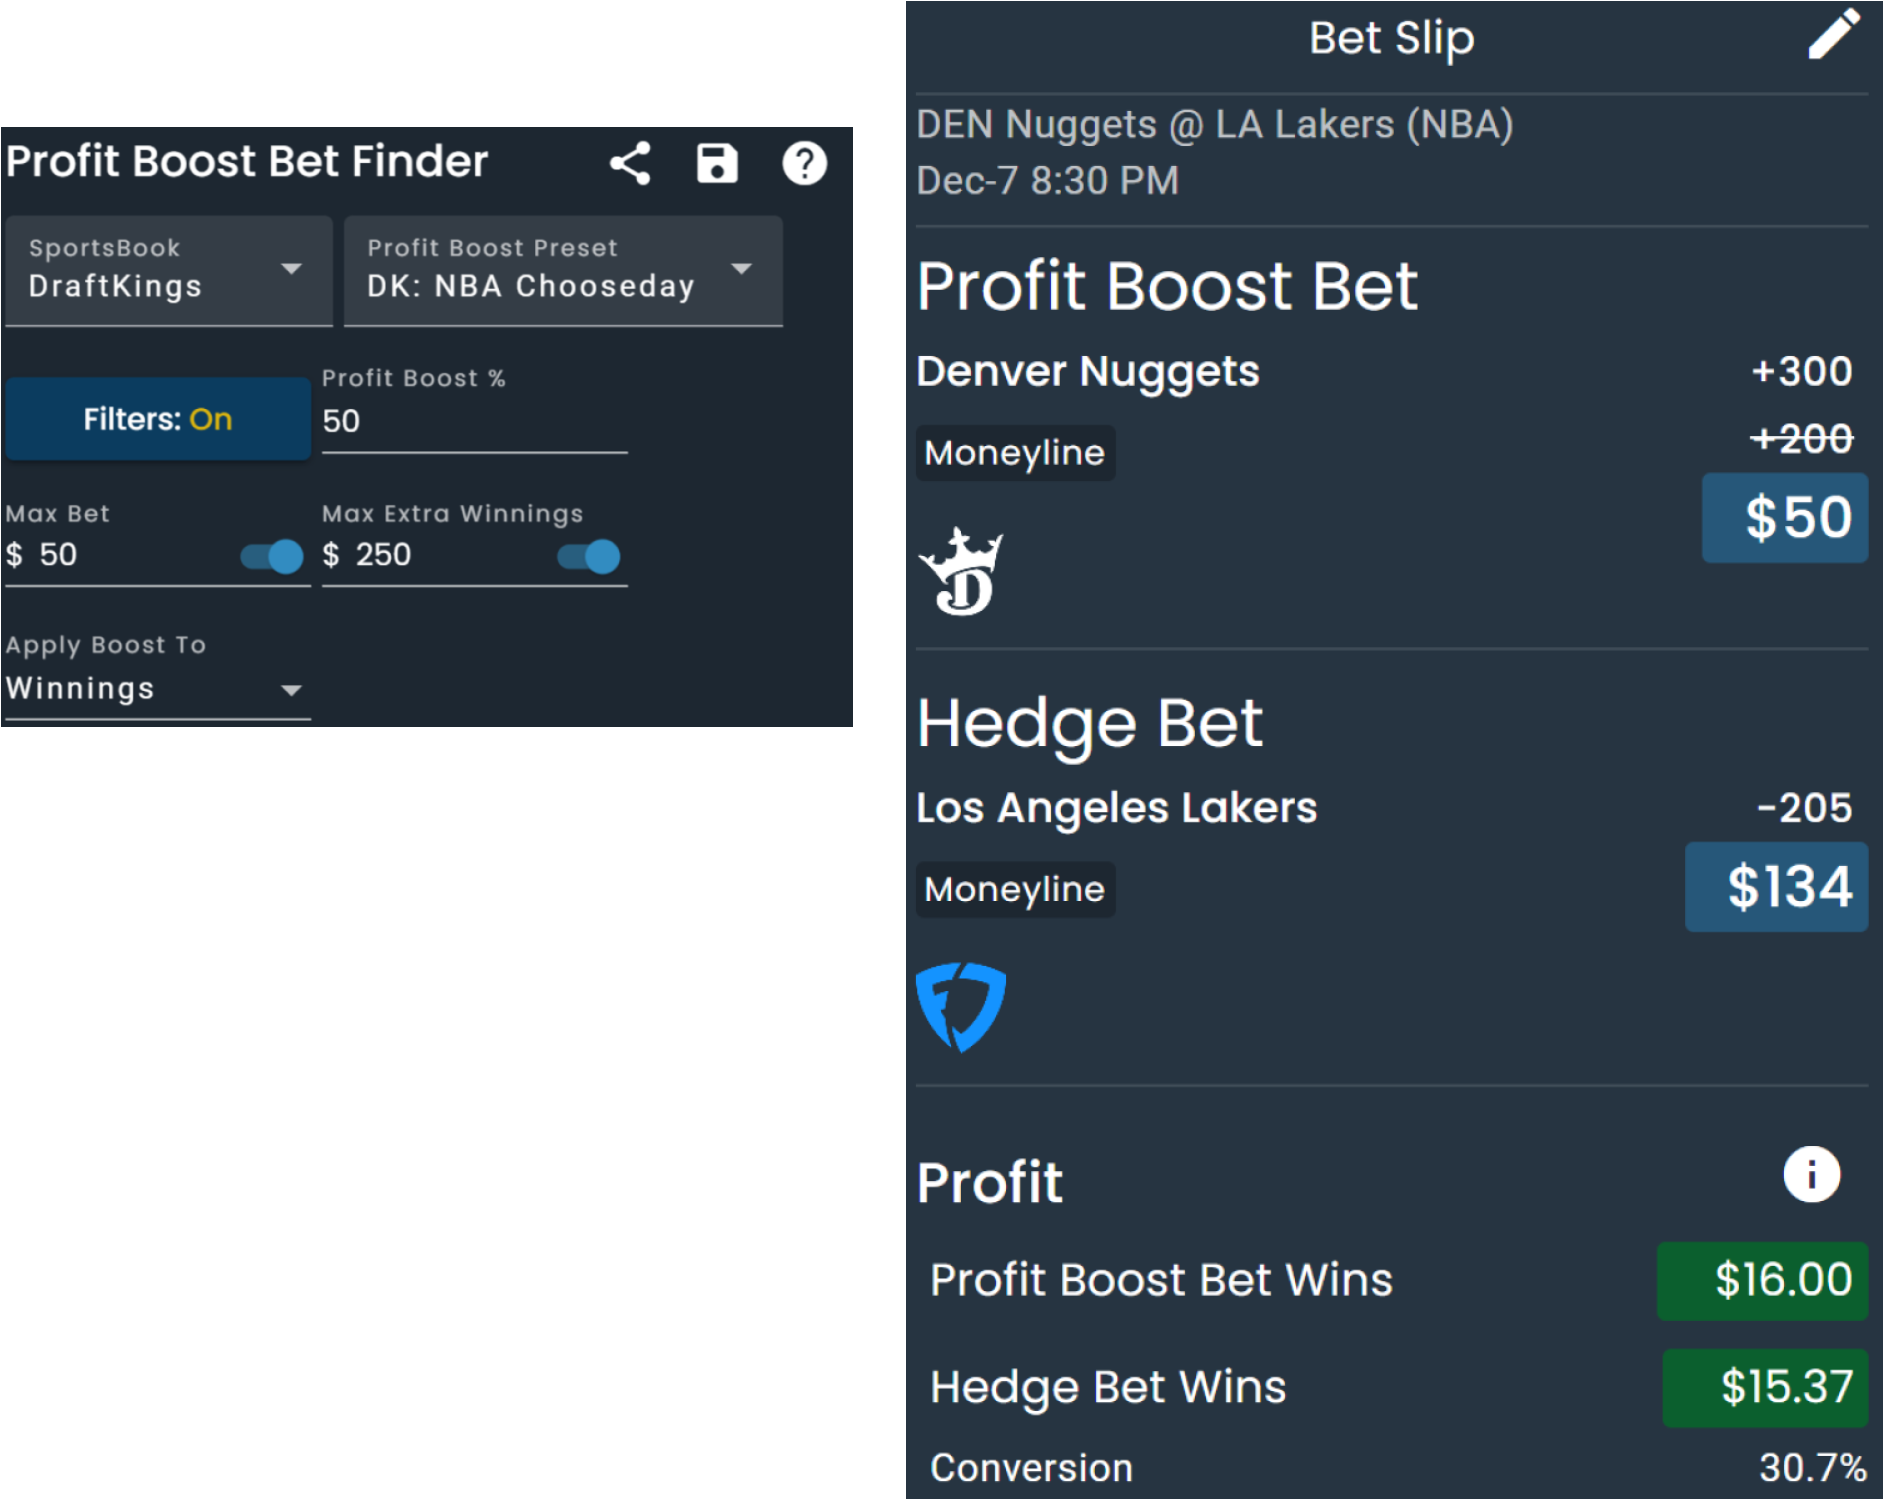 Screenshot of the Profit Boost Bet Finder on DarkHorse Odds a DrafKings Profit Boost.